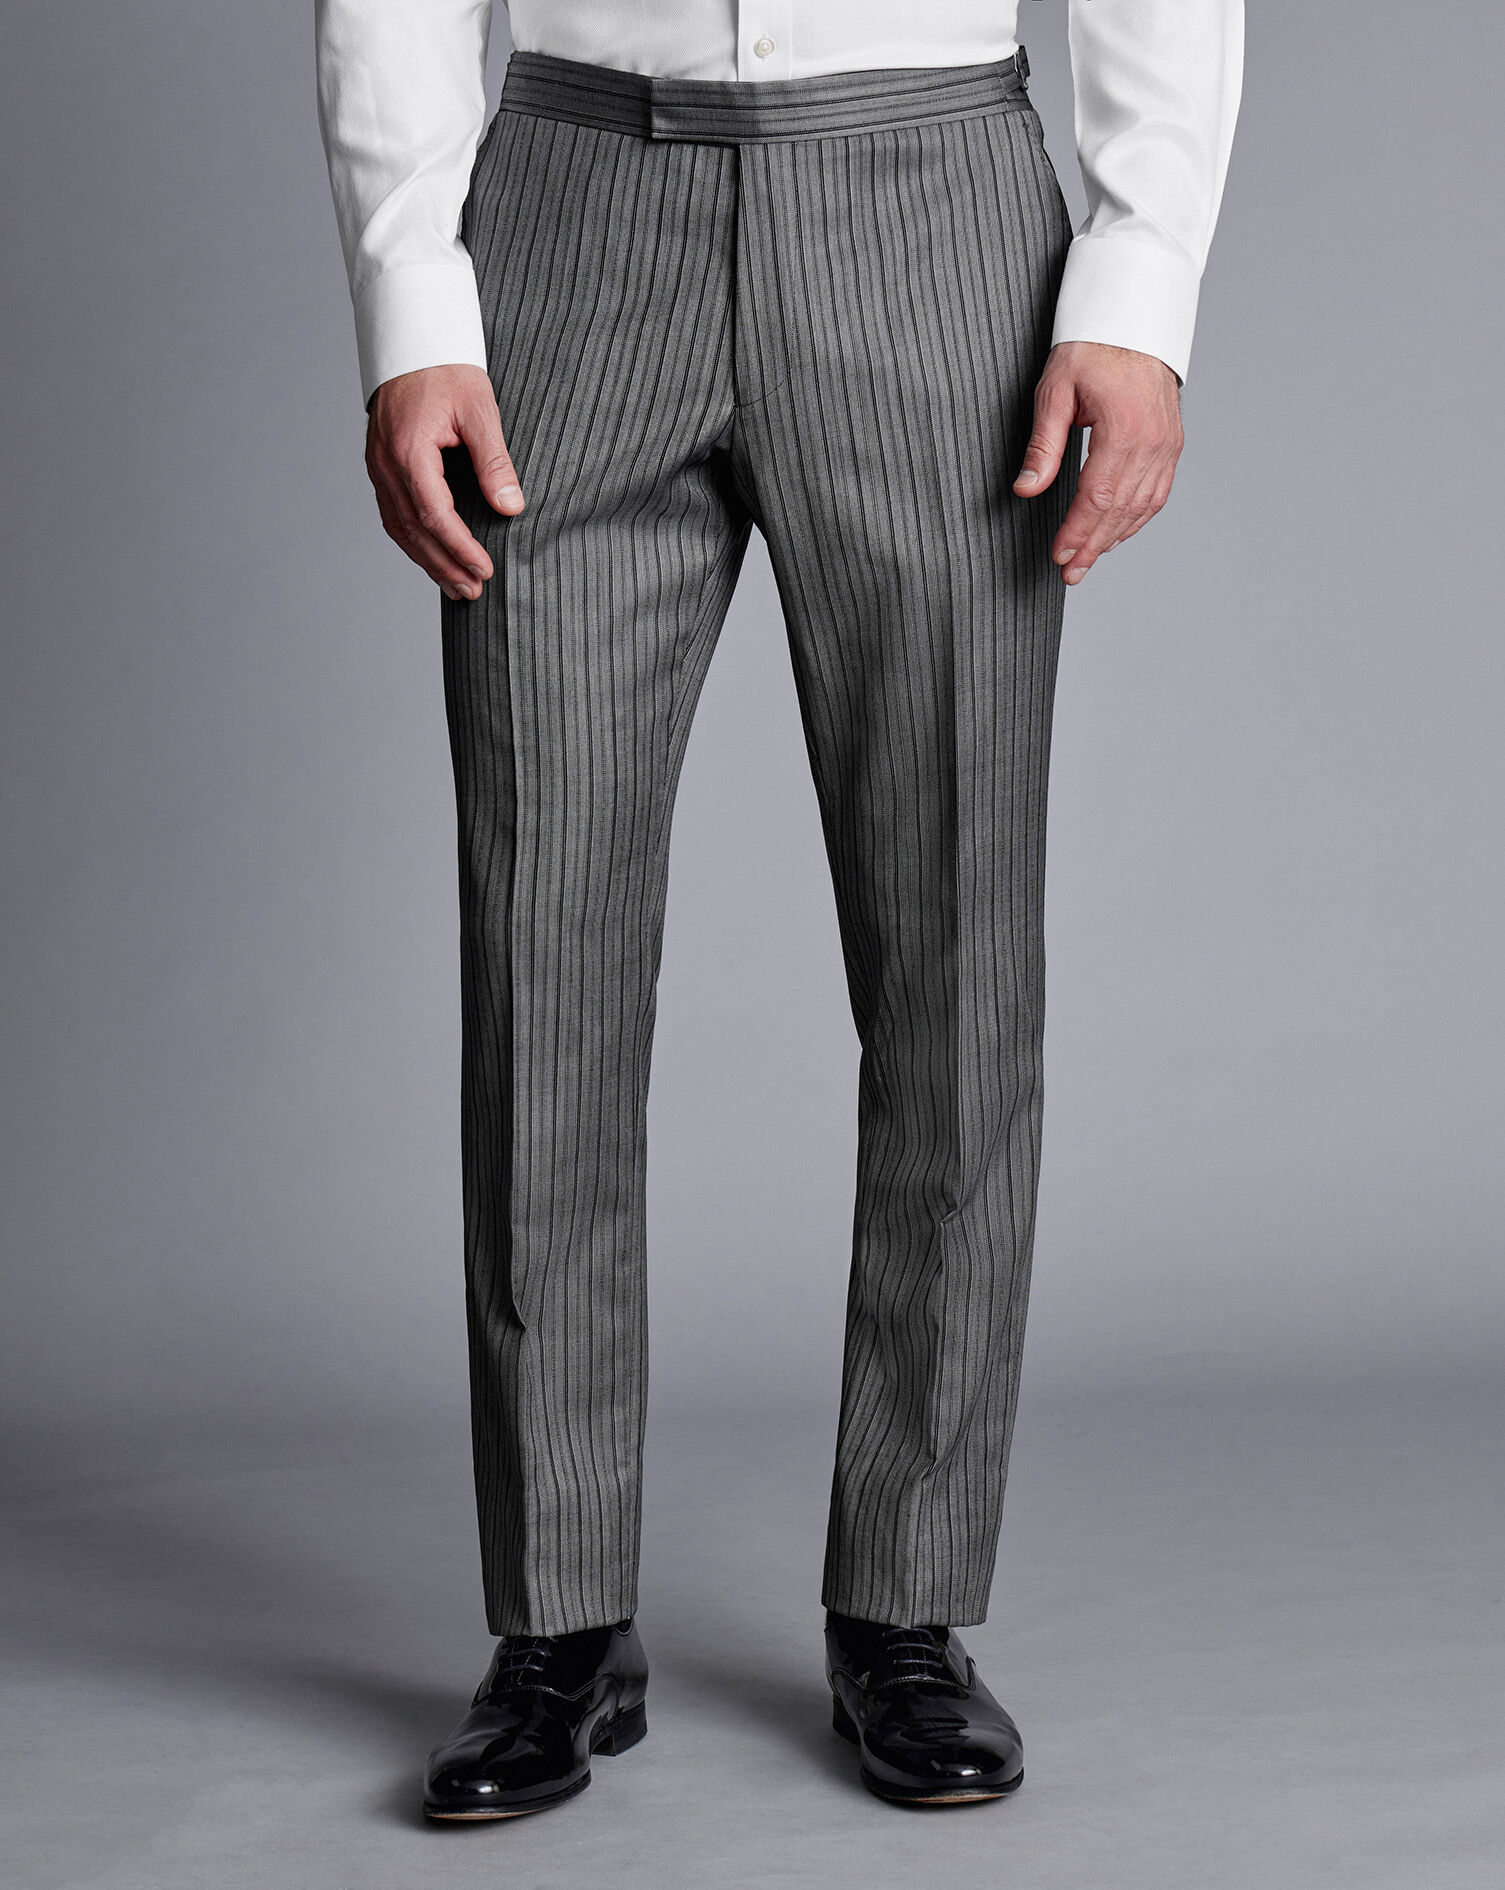 Buy SREY Mens Slim Fit Polyester Combo Pants Pack of 2  MT2300101BLBL28Black28 at Amazonin